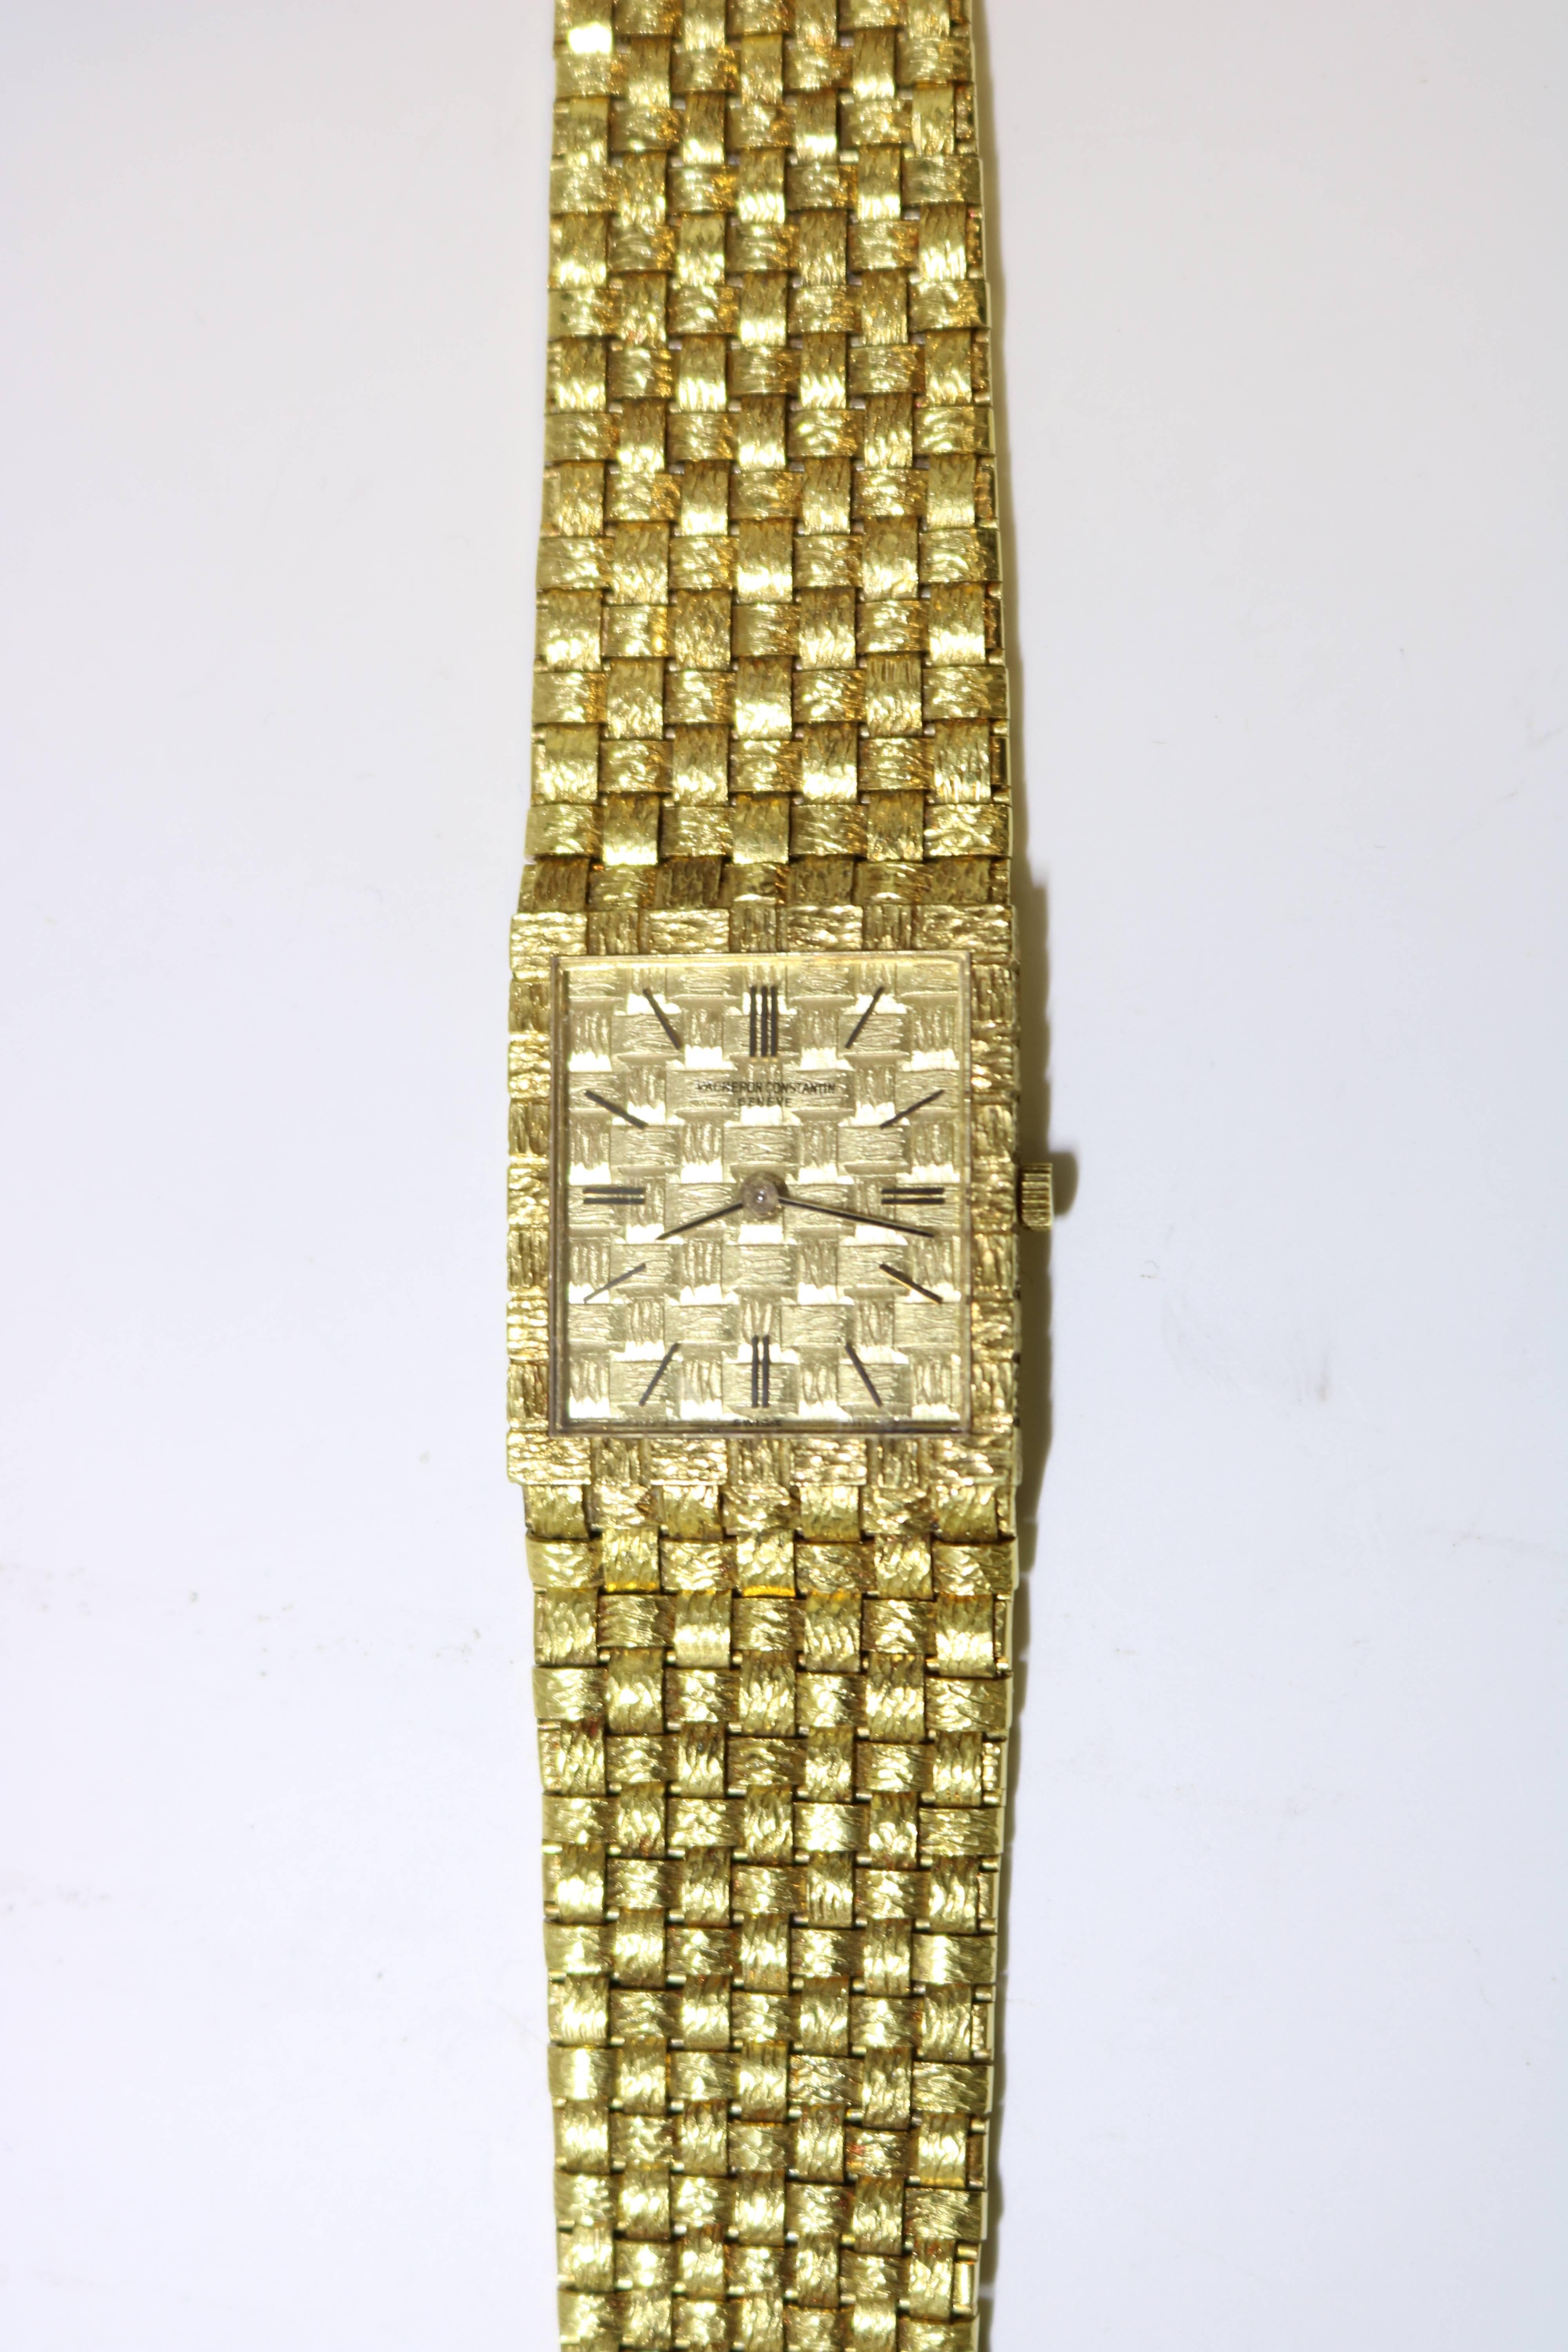 Gentlemen's watch in 18k Yellow Gold basket weave wrist watch with 17 Jewel Swiss movement